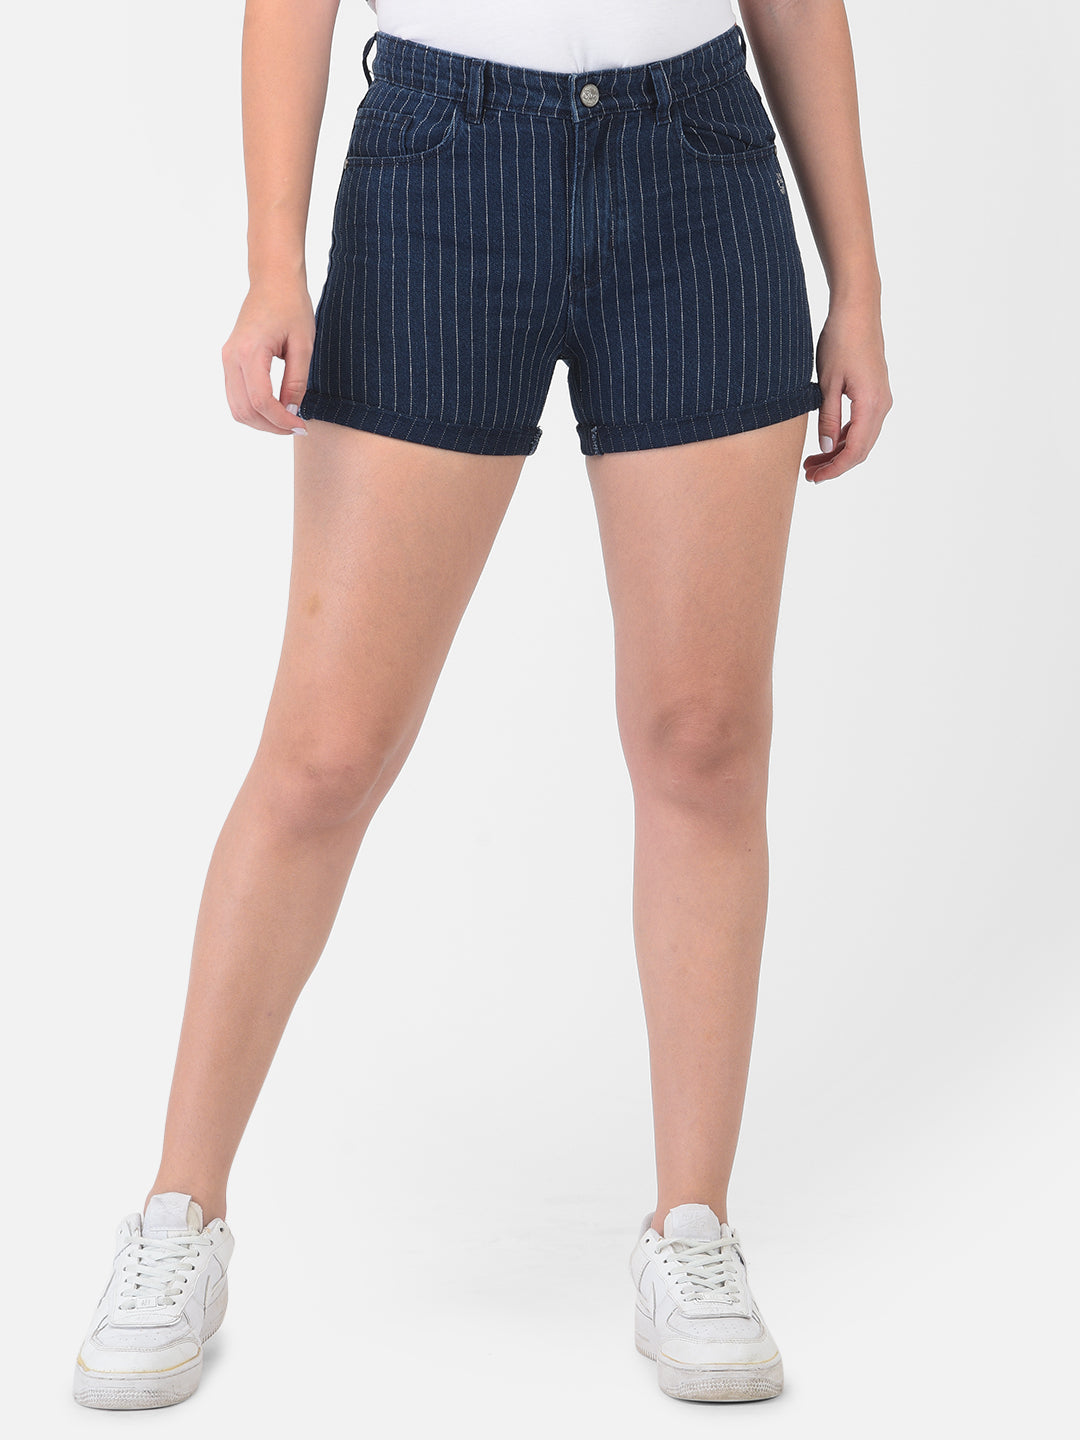 Navy Blue Striped Shorts - Women Shorts